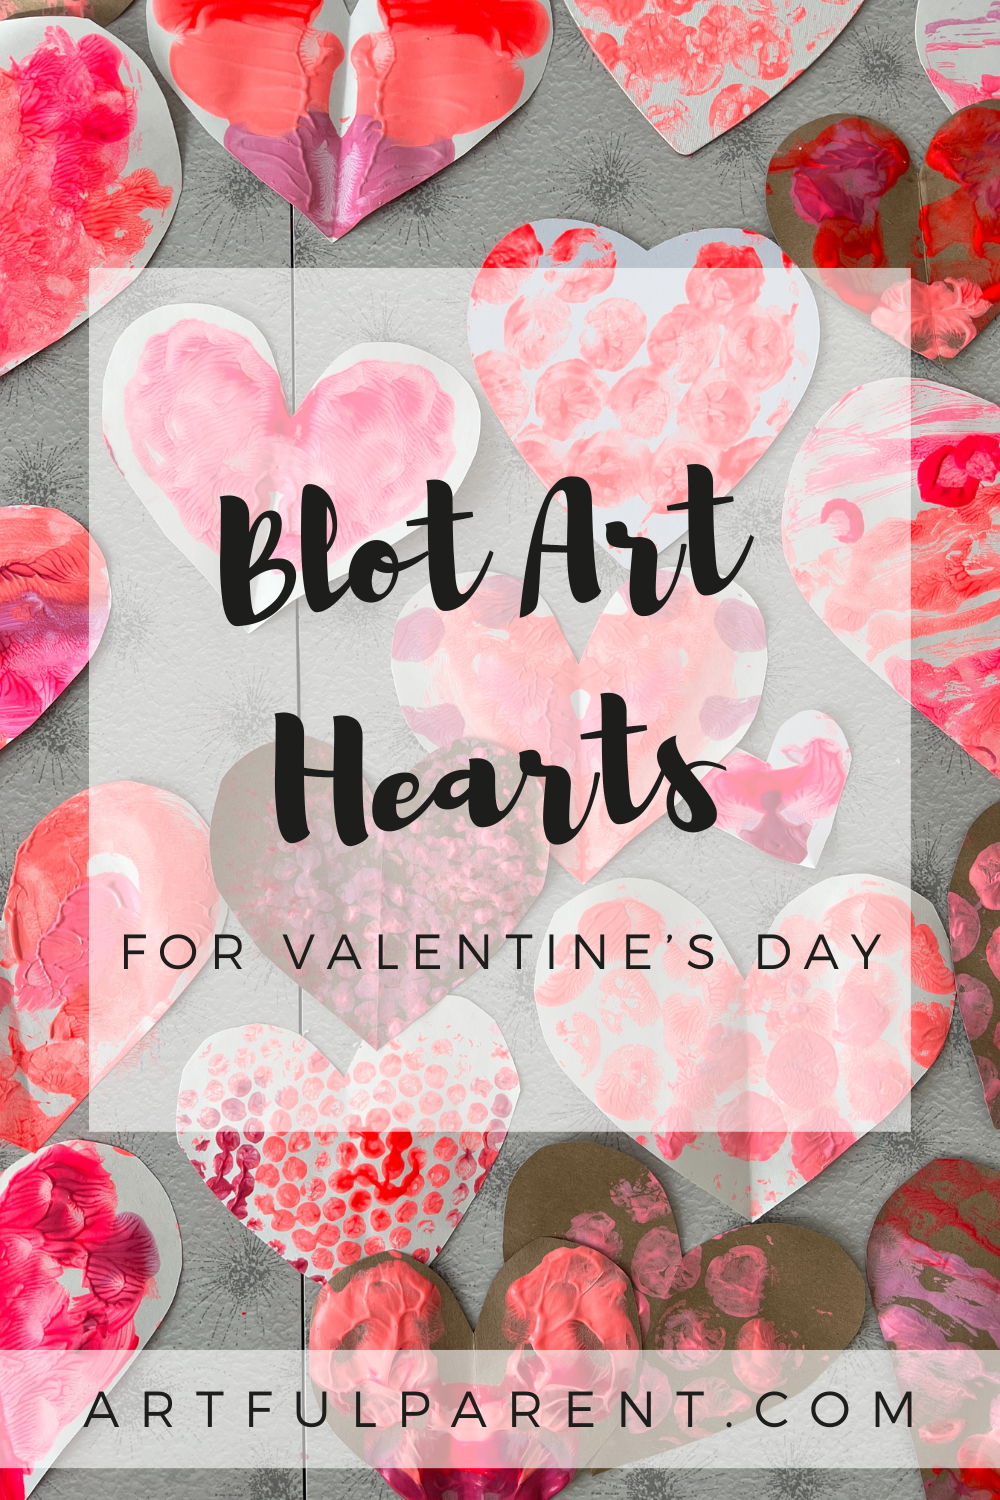 How to Make Blot Art Hearts